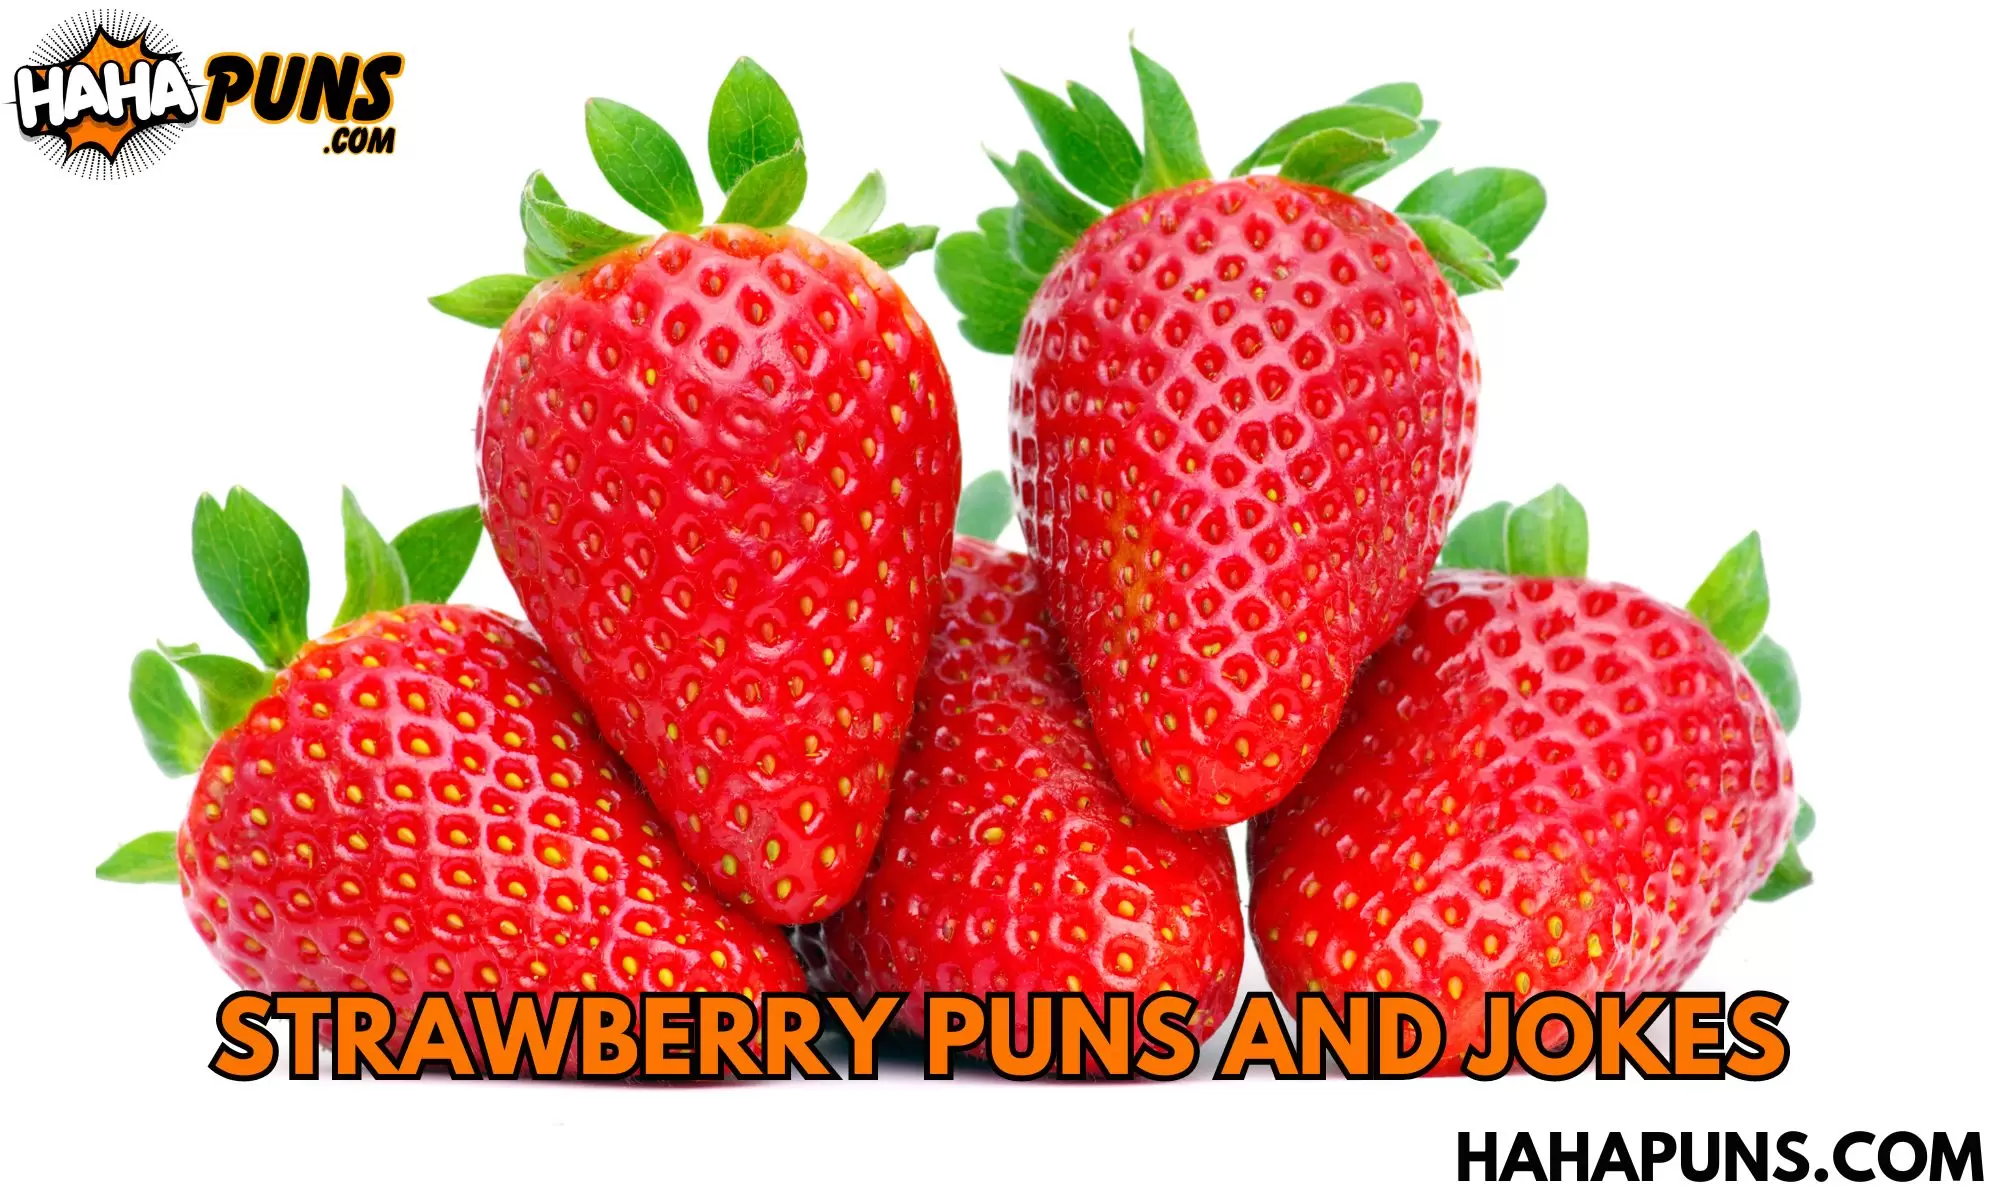 Strawberry Puns and Jokes